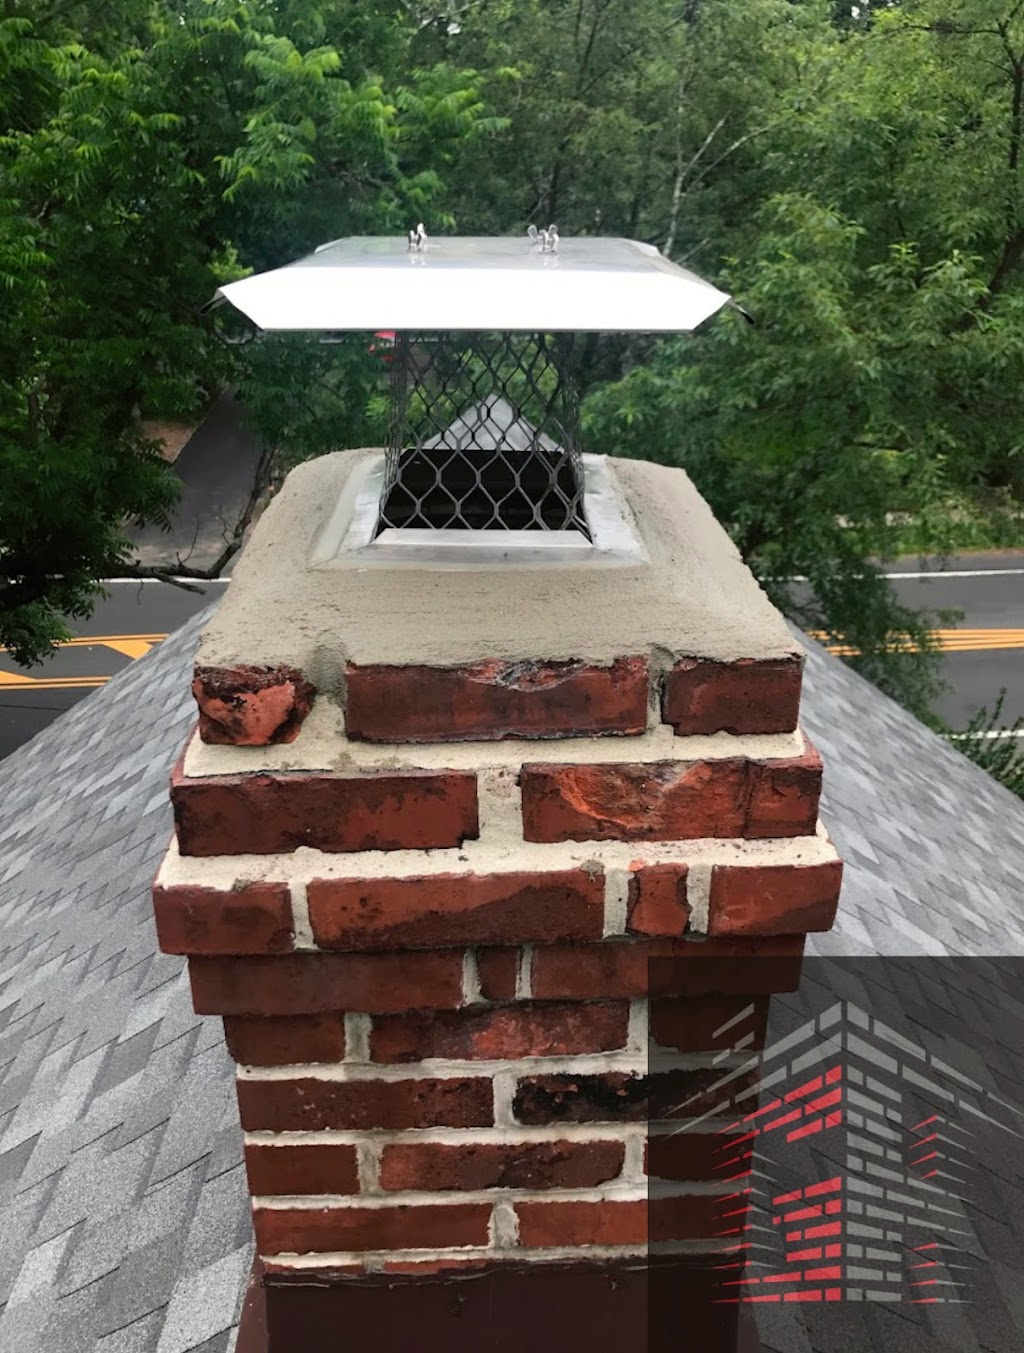 Golden Hammer Roofing & Chimney LLC | 474 Ottawa Ave, Hasbrouck Heights, NJ 07604 | Phone: (201) 364-2084